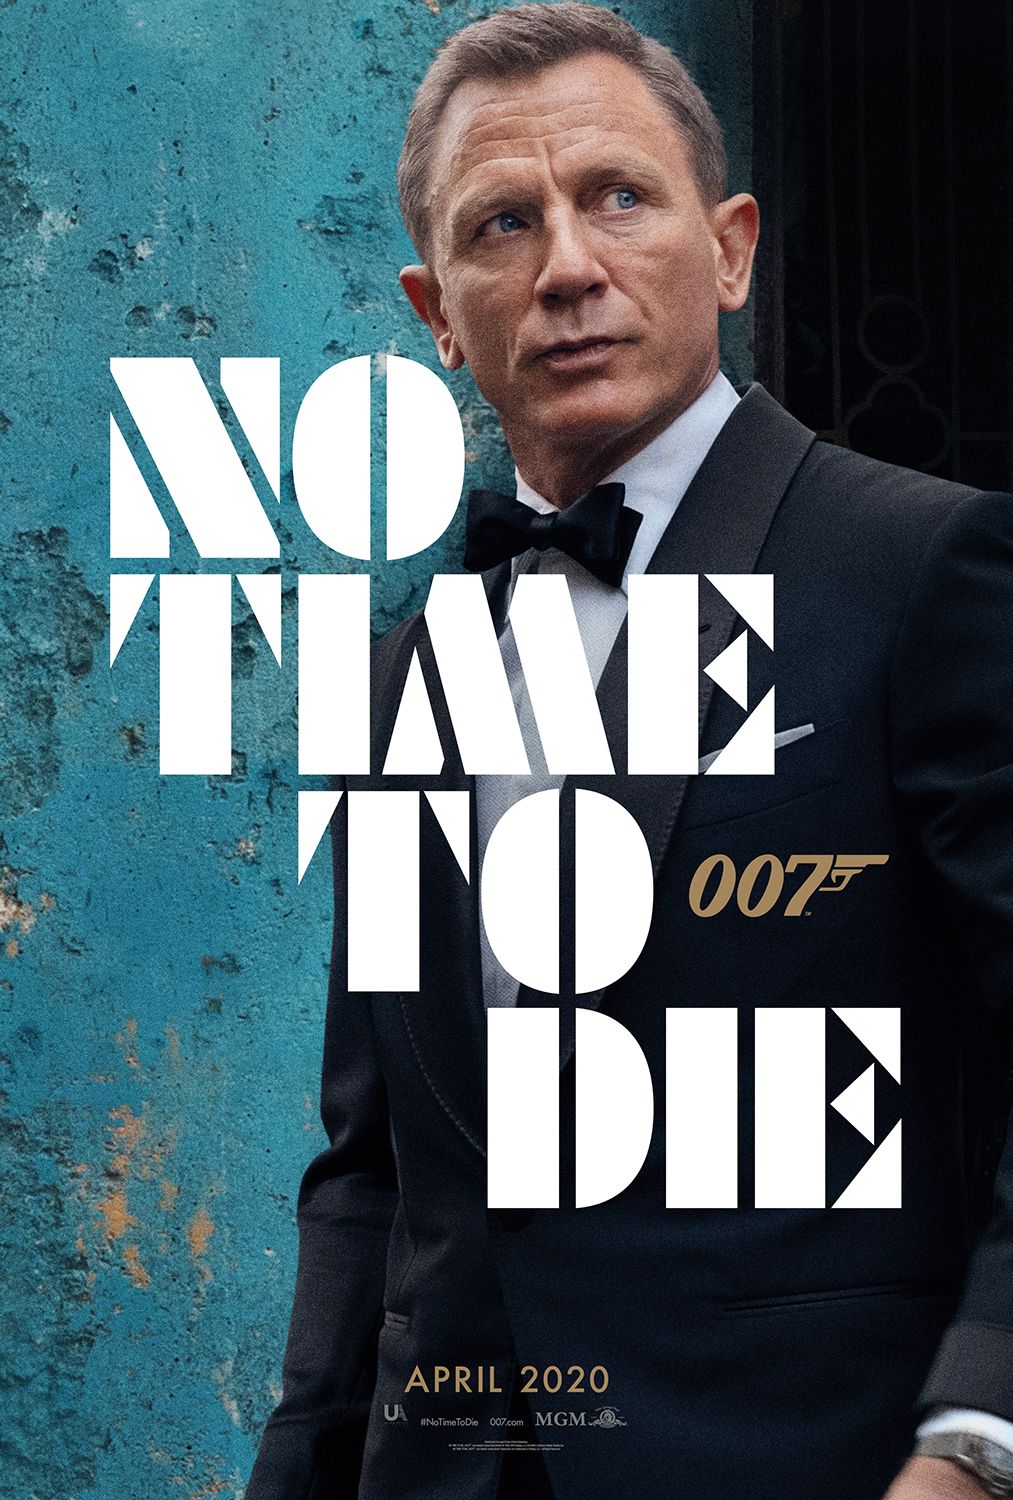 Todas las películas James Bond llegarán a Prime video este mes